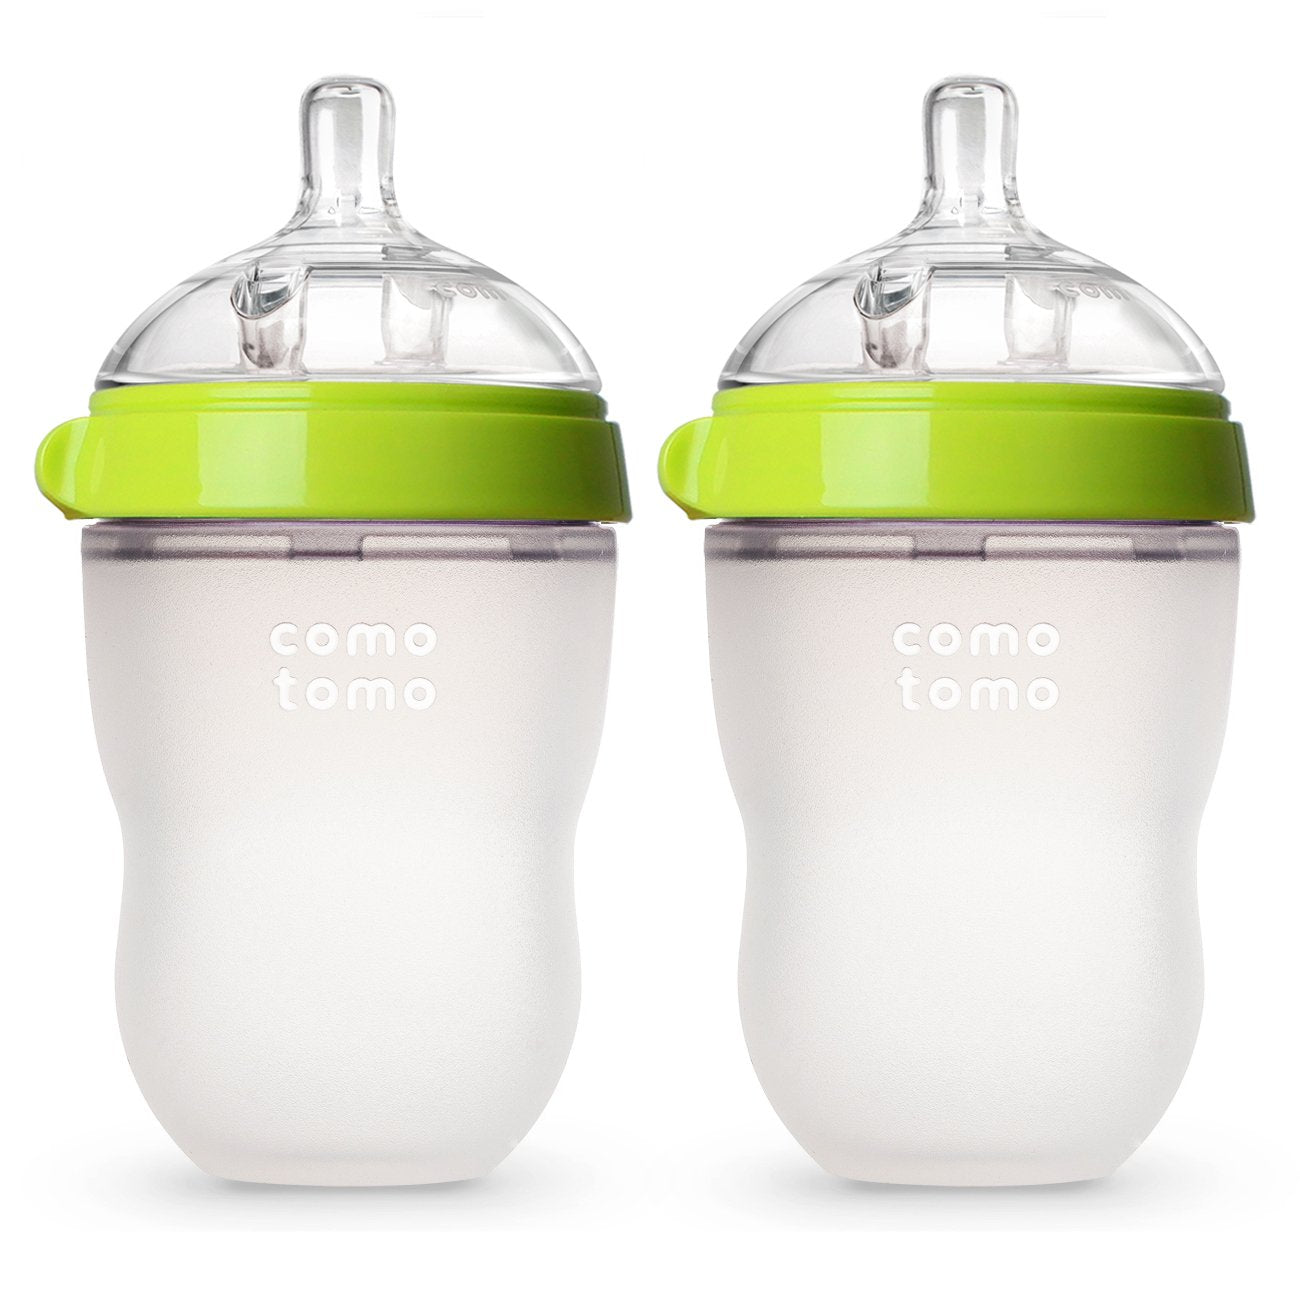 Comotomo Baby Bottle (2 Count)